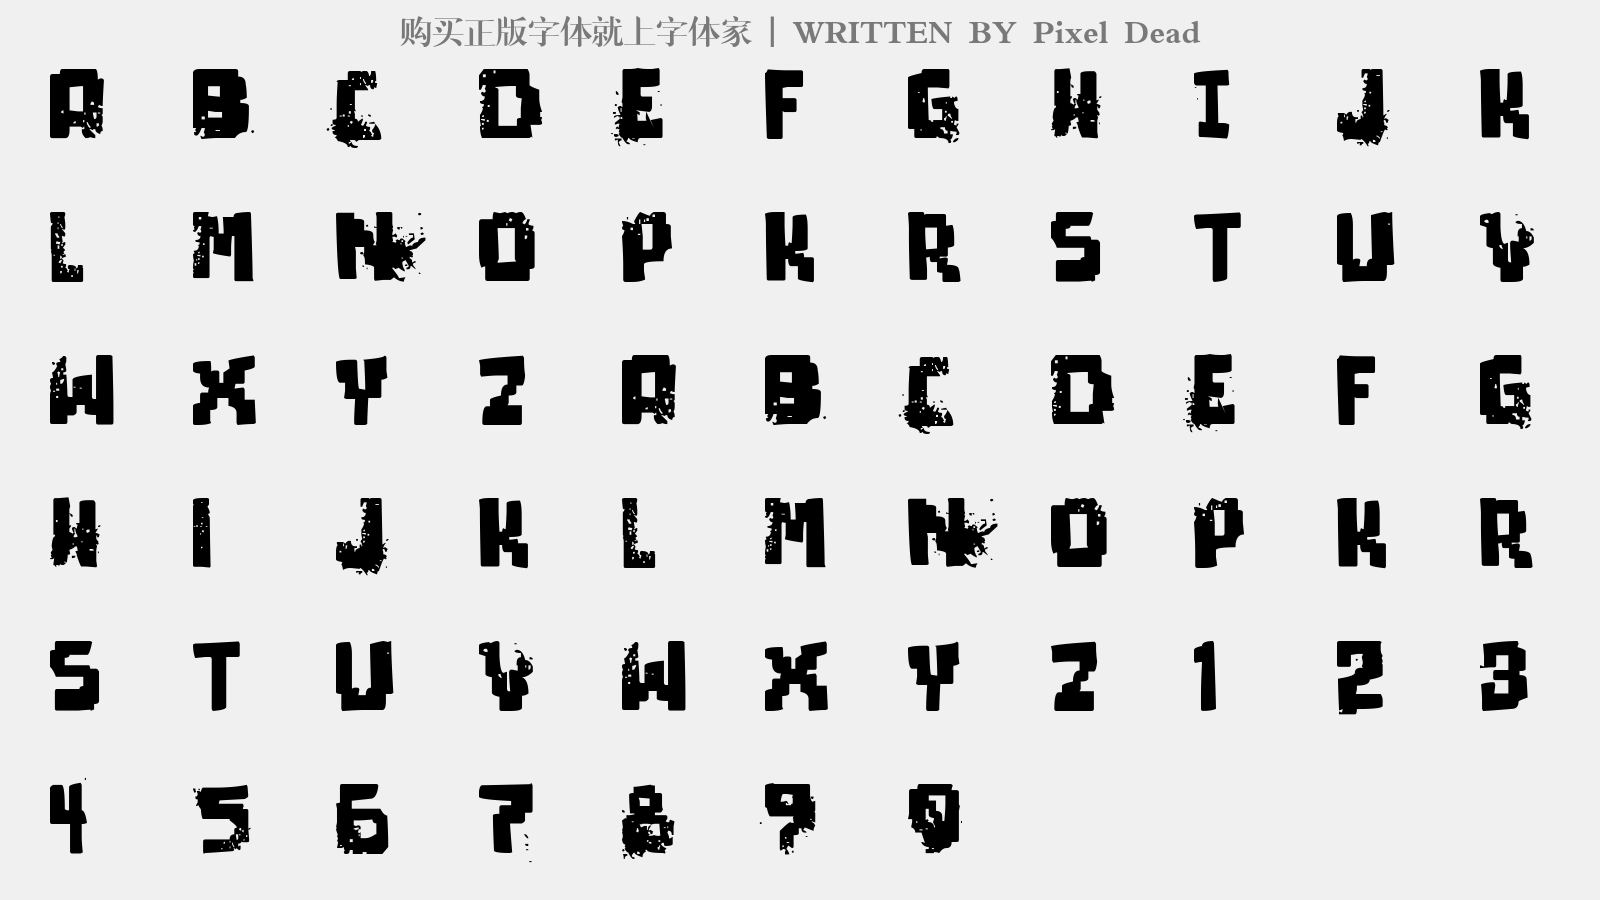 Pixel Dead - 大写字母/小写字母/数字